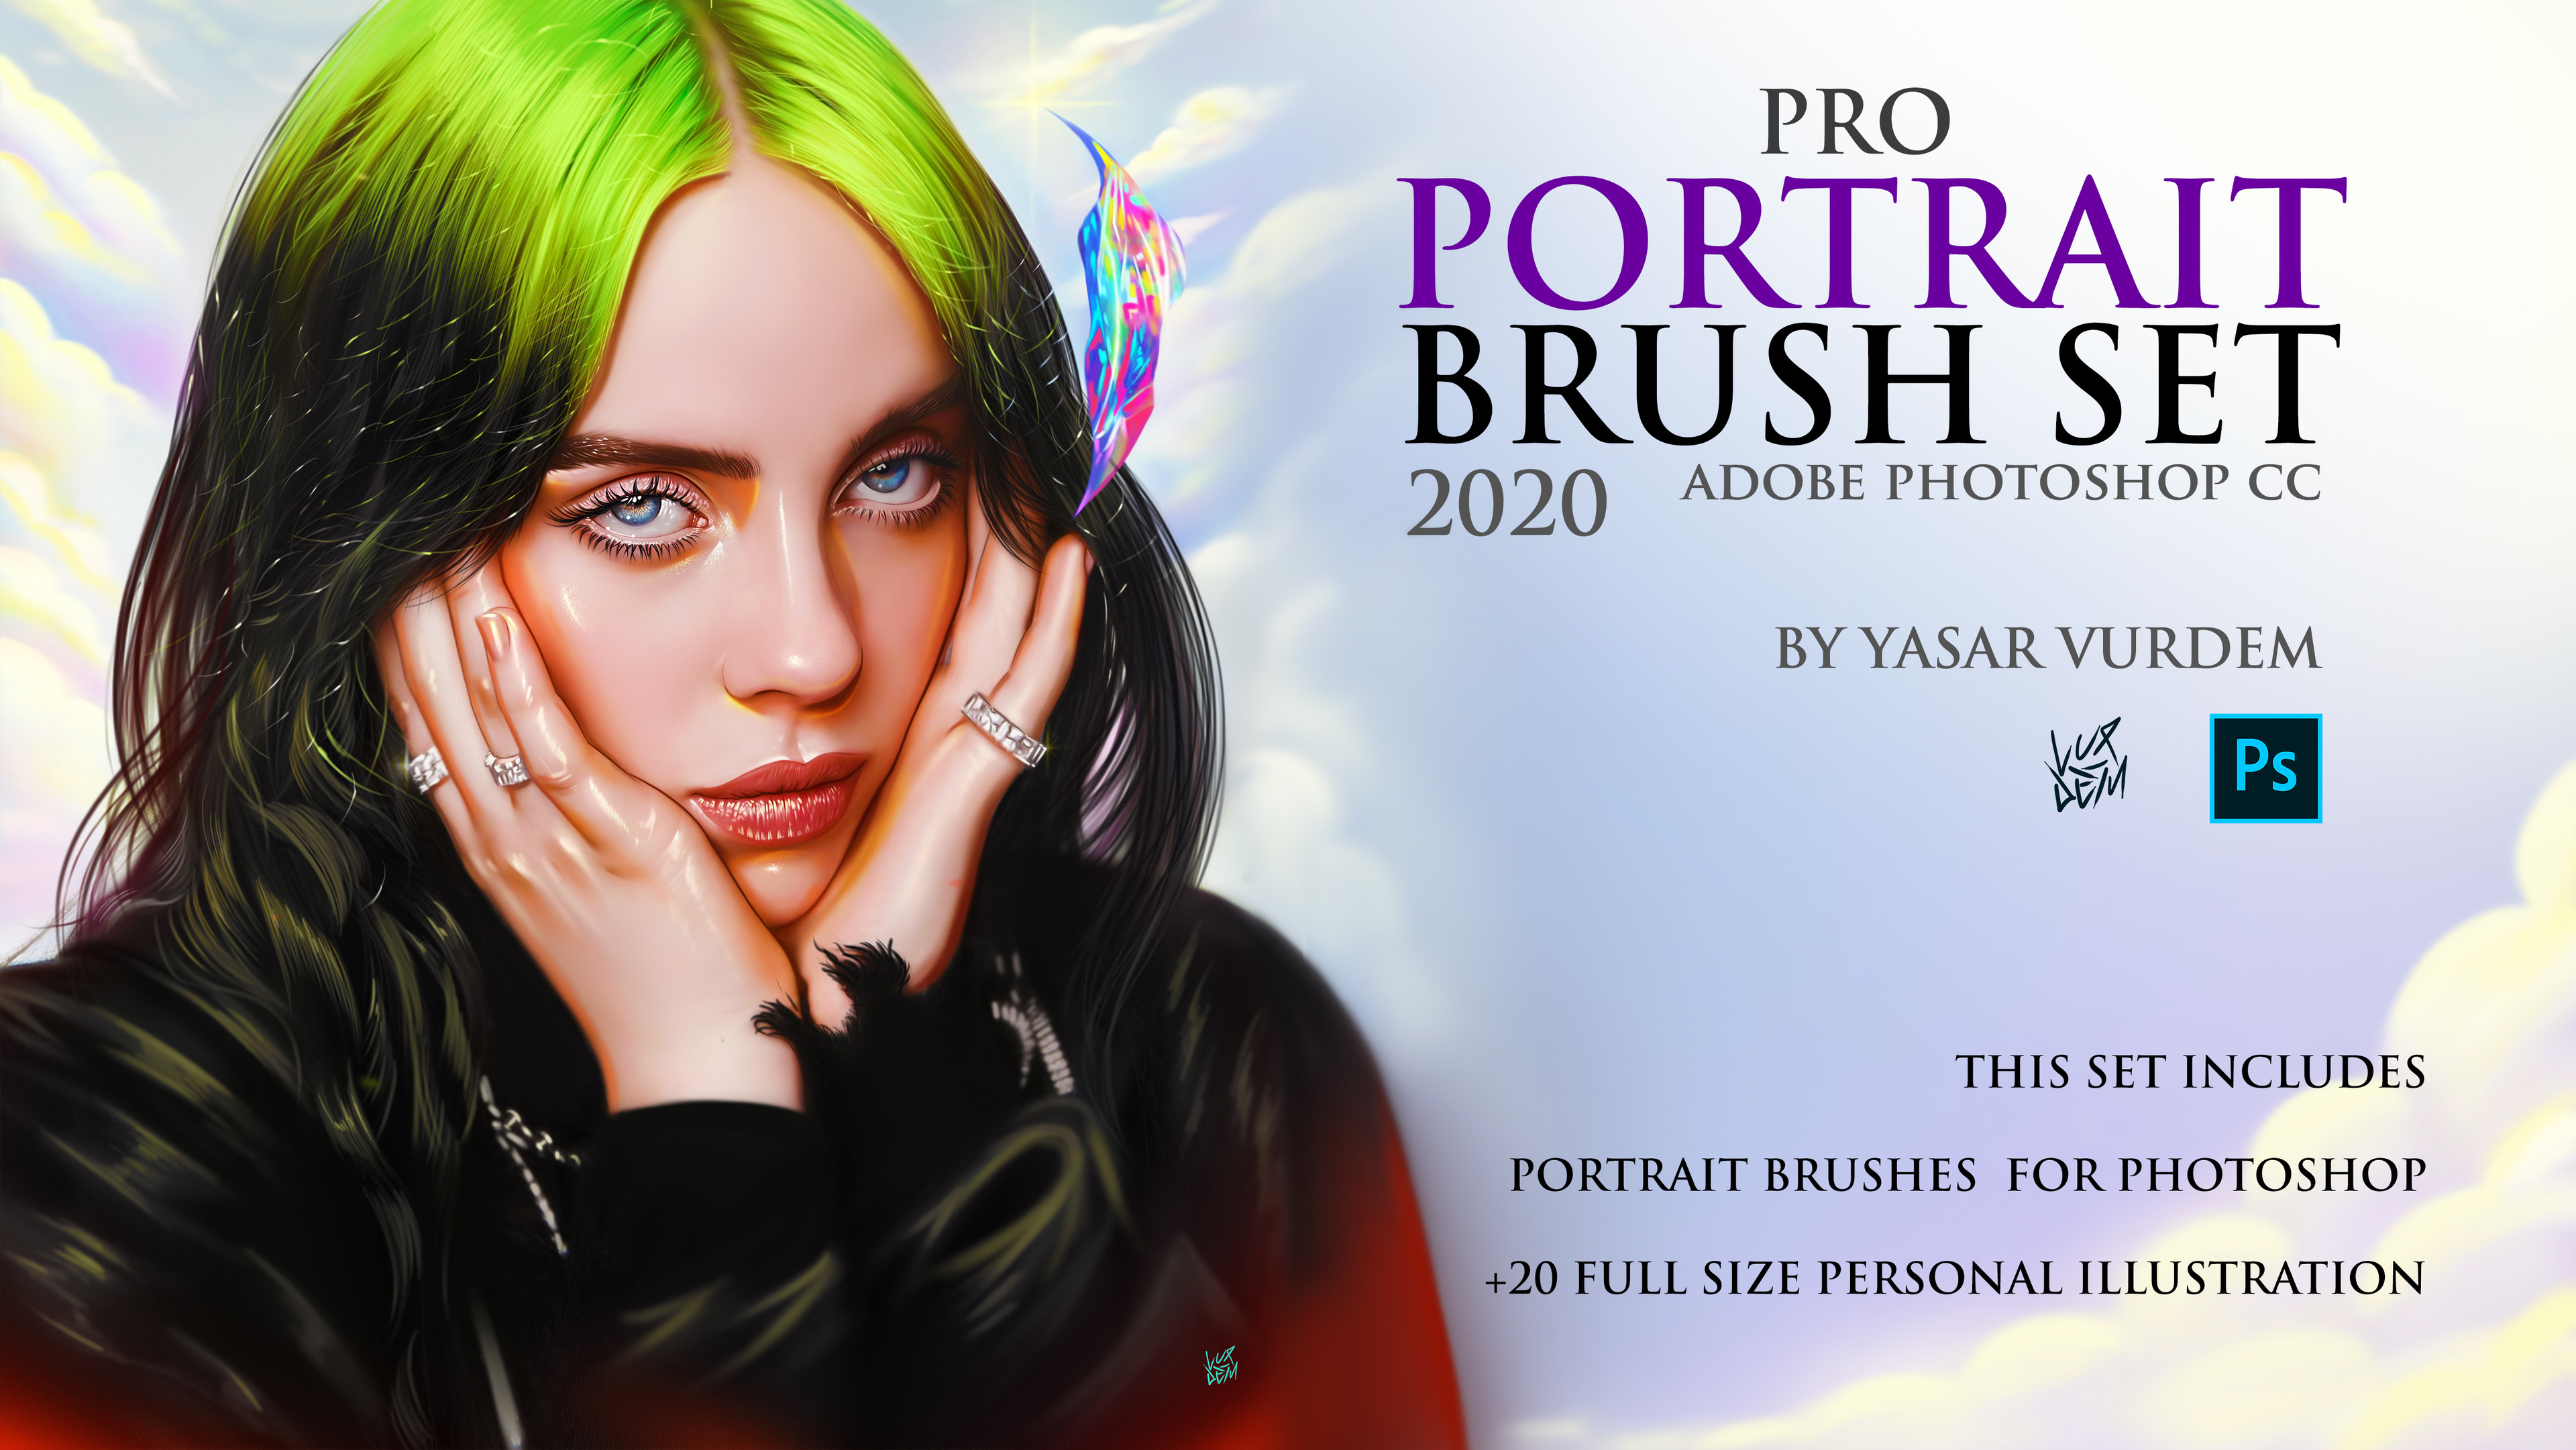 Portrait brush set link: https://www.artstation.com/vurdem/store/65ej/portrait-brush-set-for-photoshop